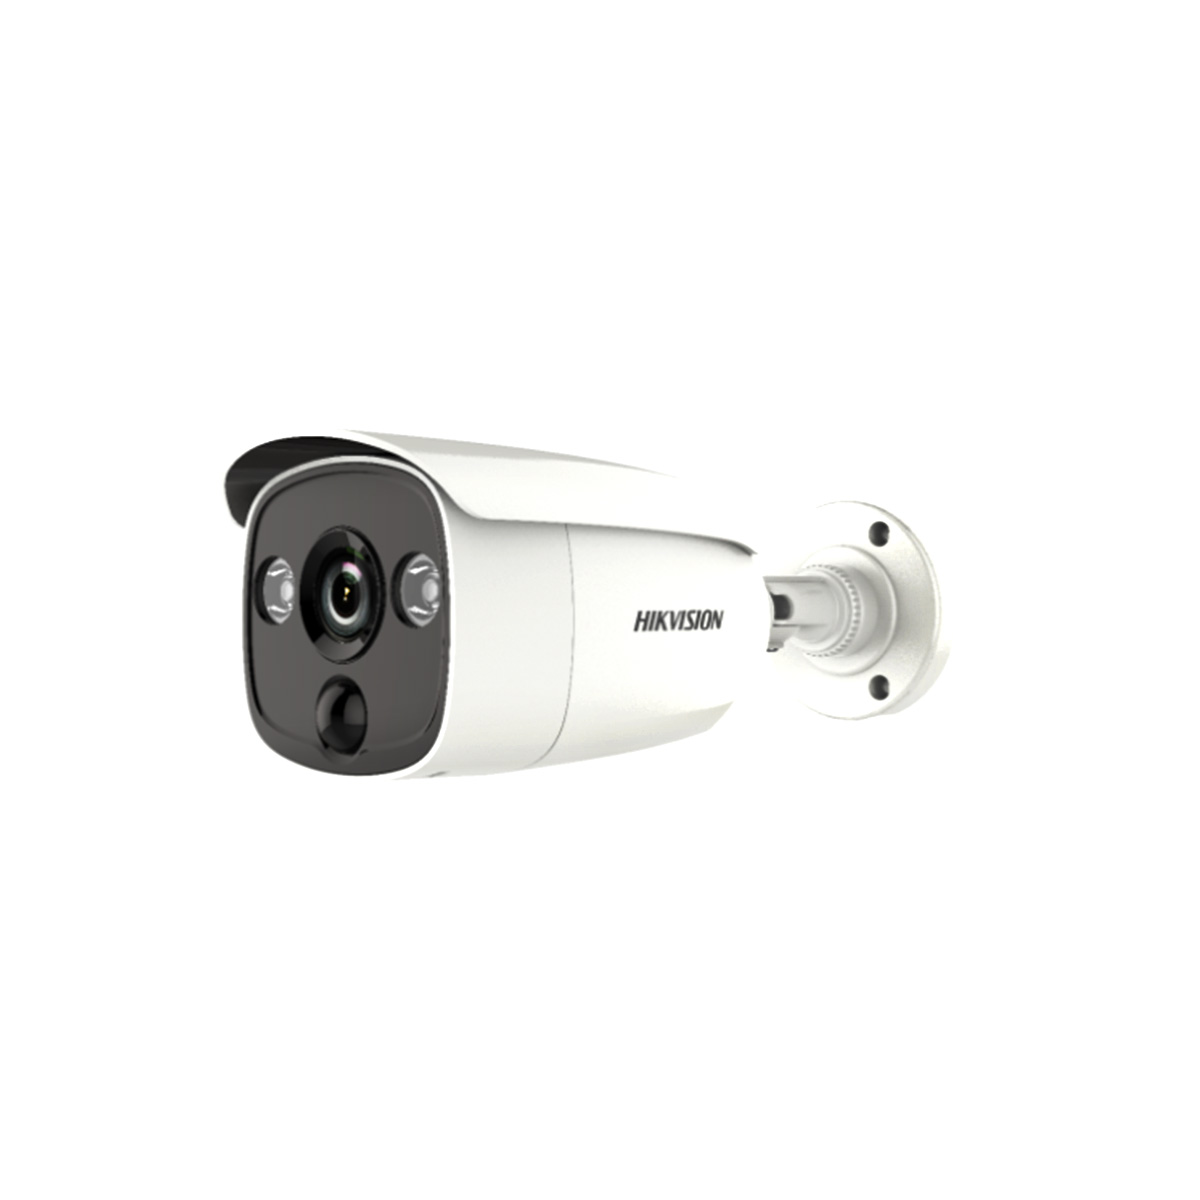 Cámara Hikvision turbo HD tipo bullet DS-2CE12D8T-PIRL 2MP con sensor PIR